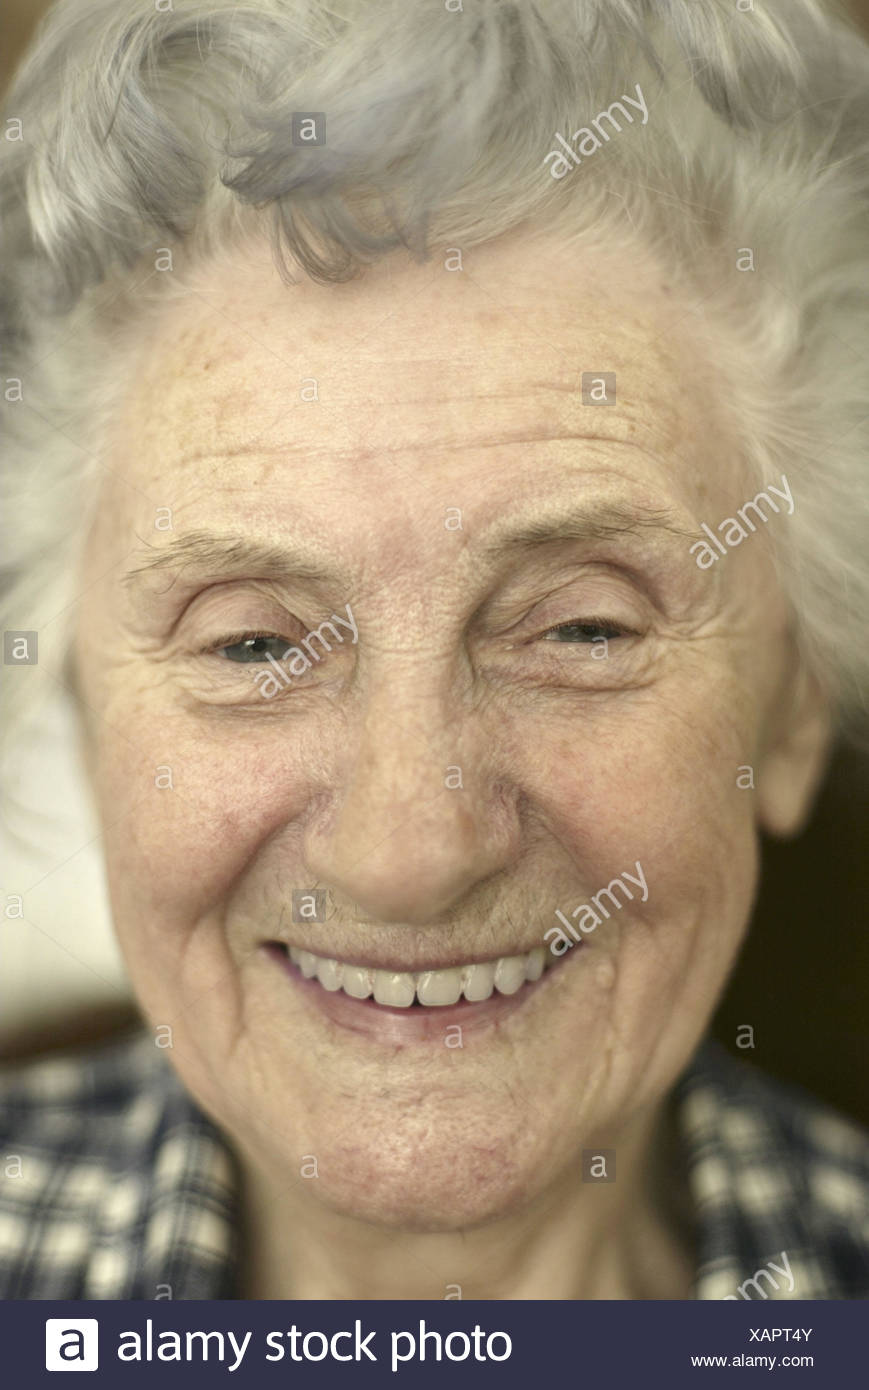 80 Years Old Granny – Porn Sex Photos